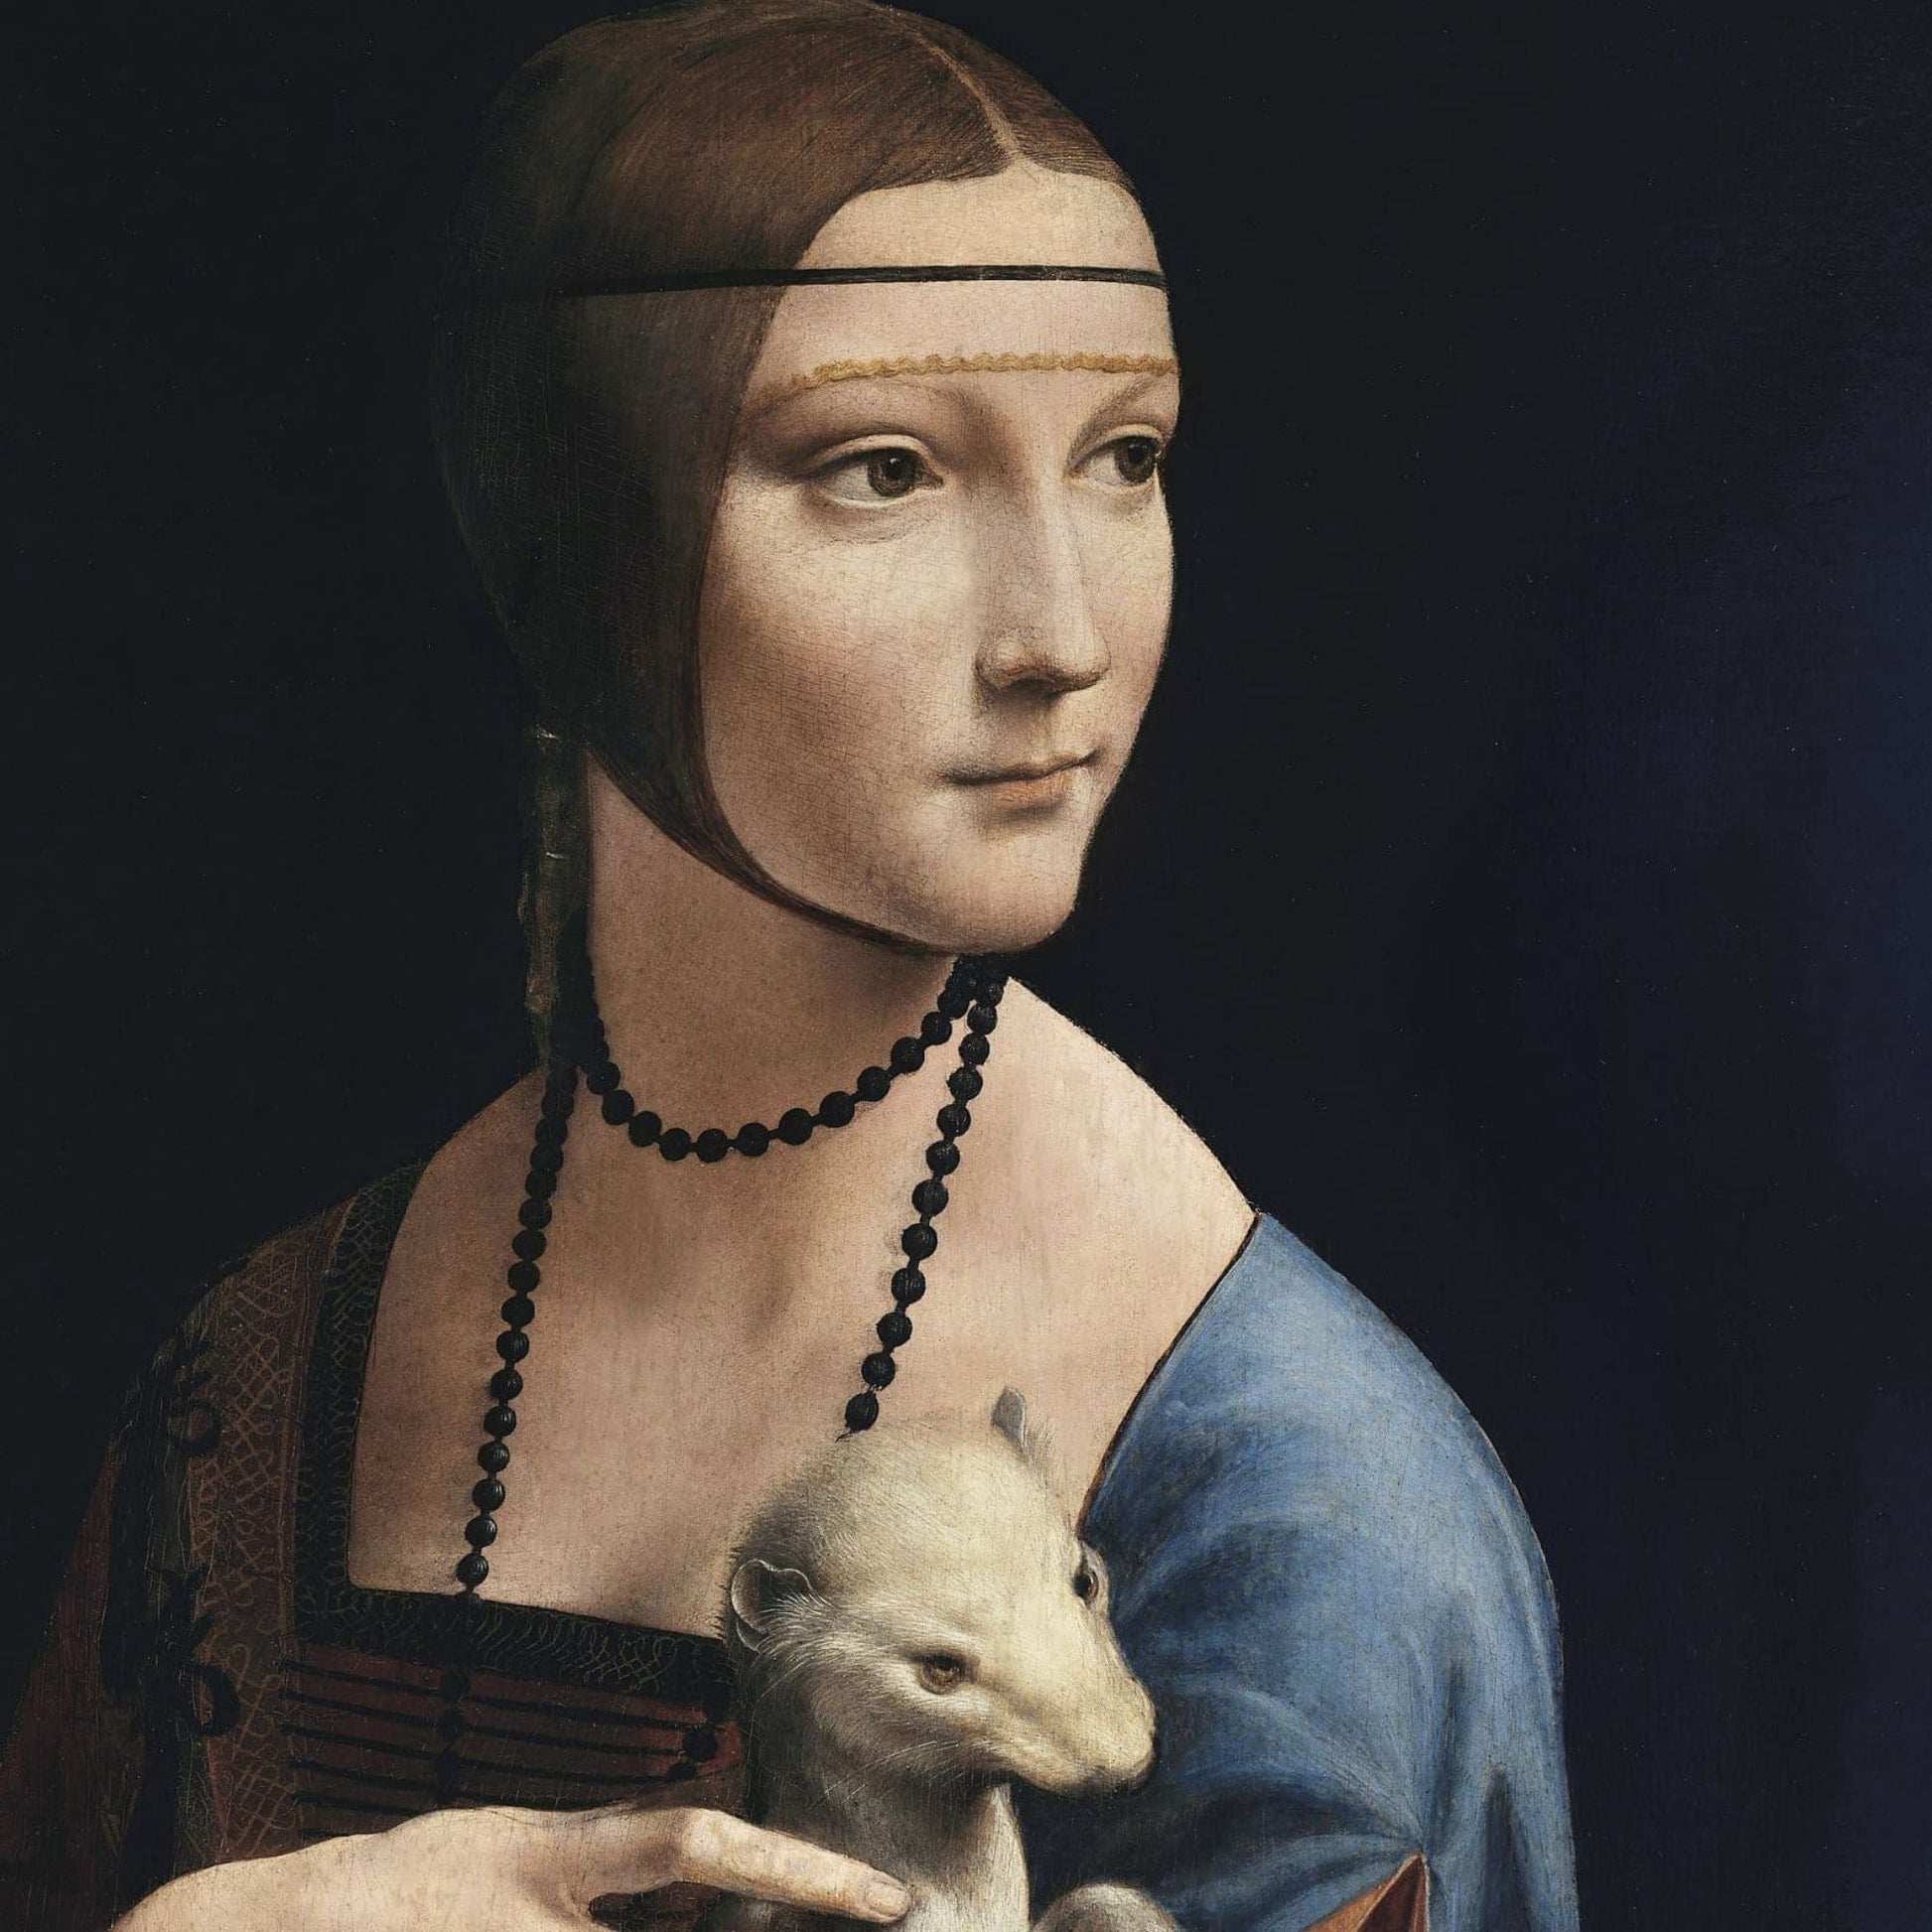 The Woman with the Ermine - Leonardo da Vinci - Print Material - Master's Gaze